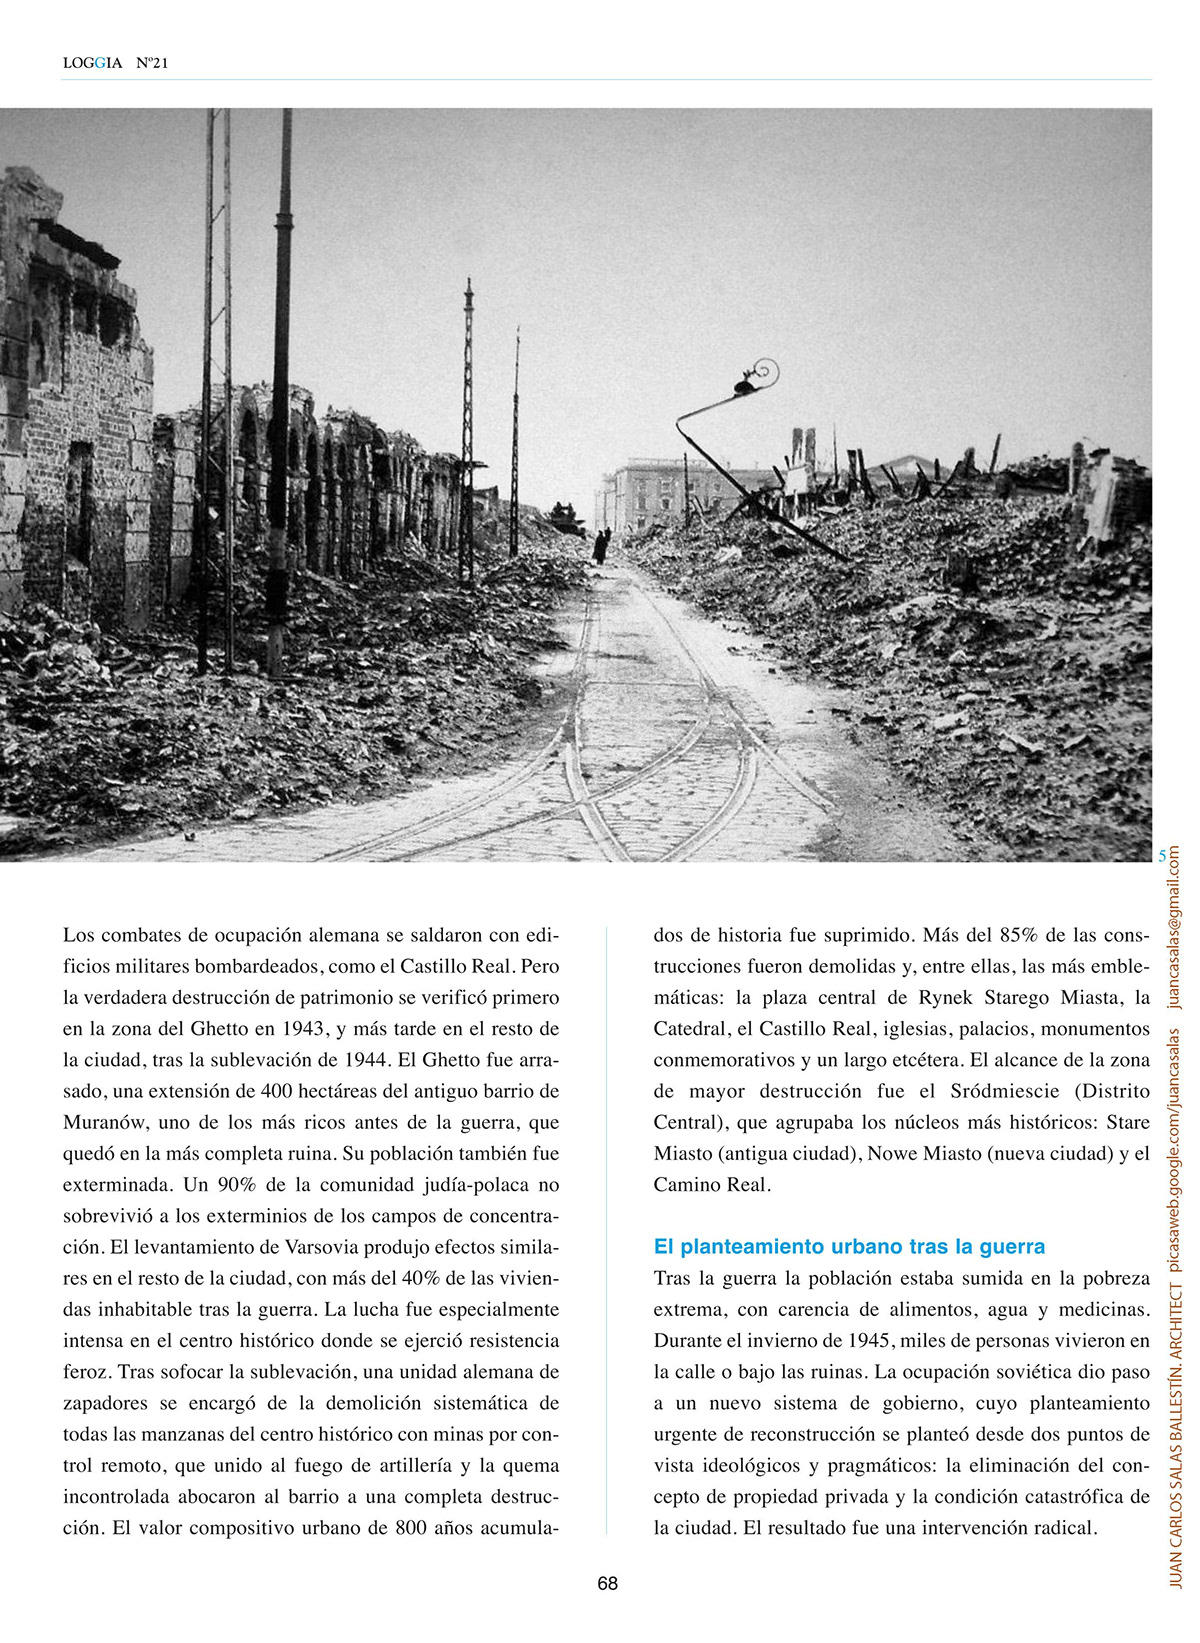 article reconstruction warsaw World war 2 restoration renovation